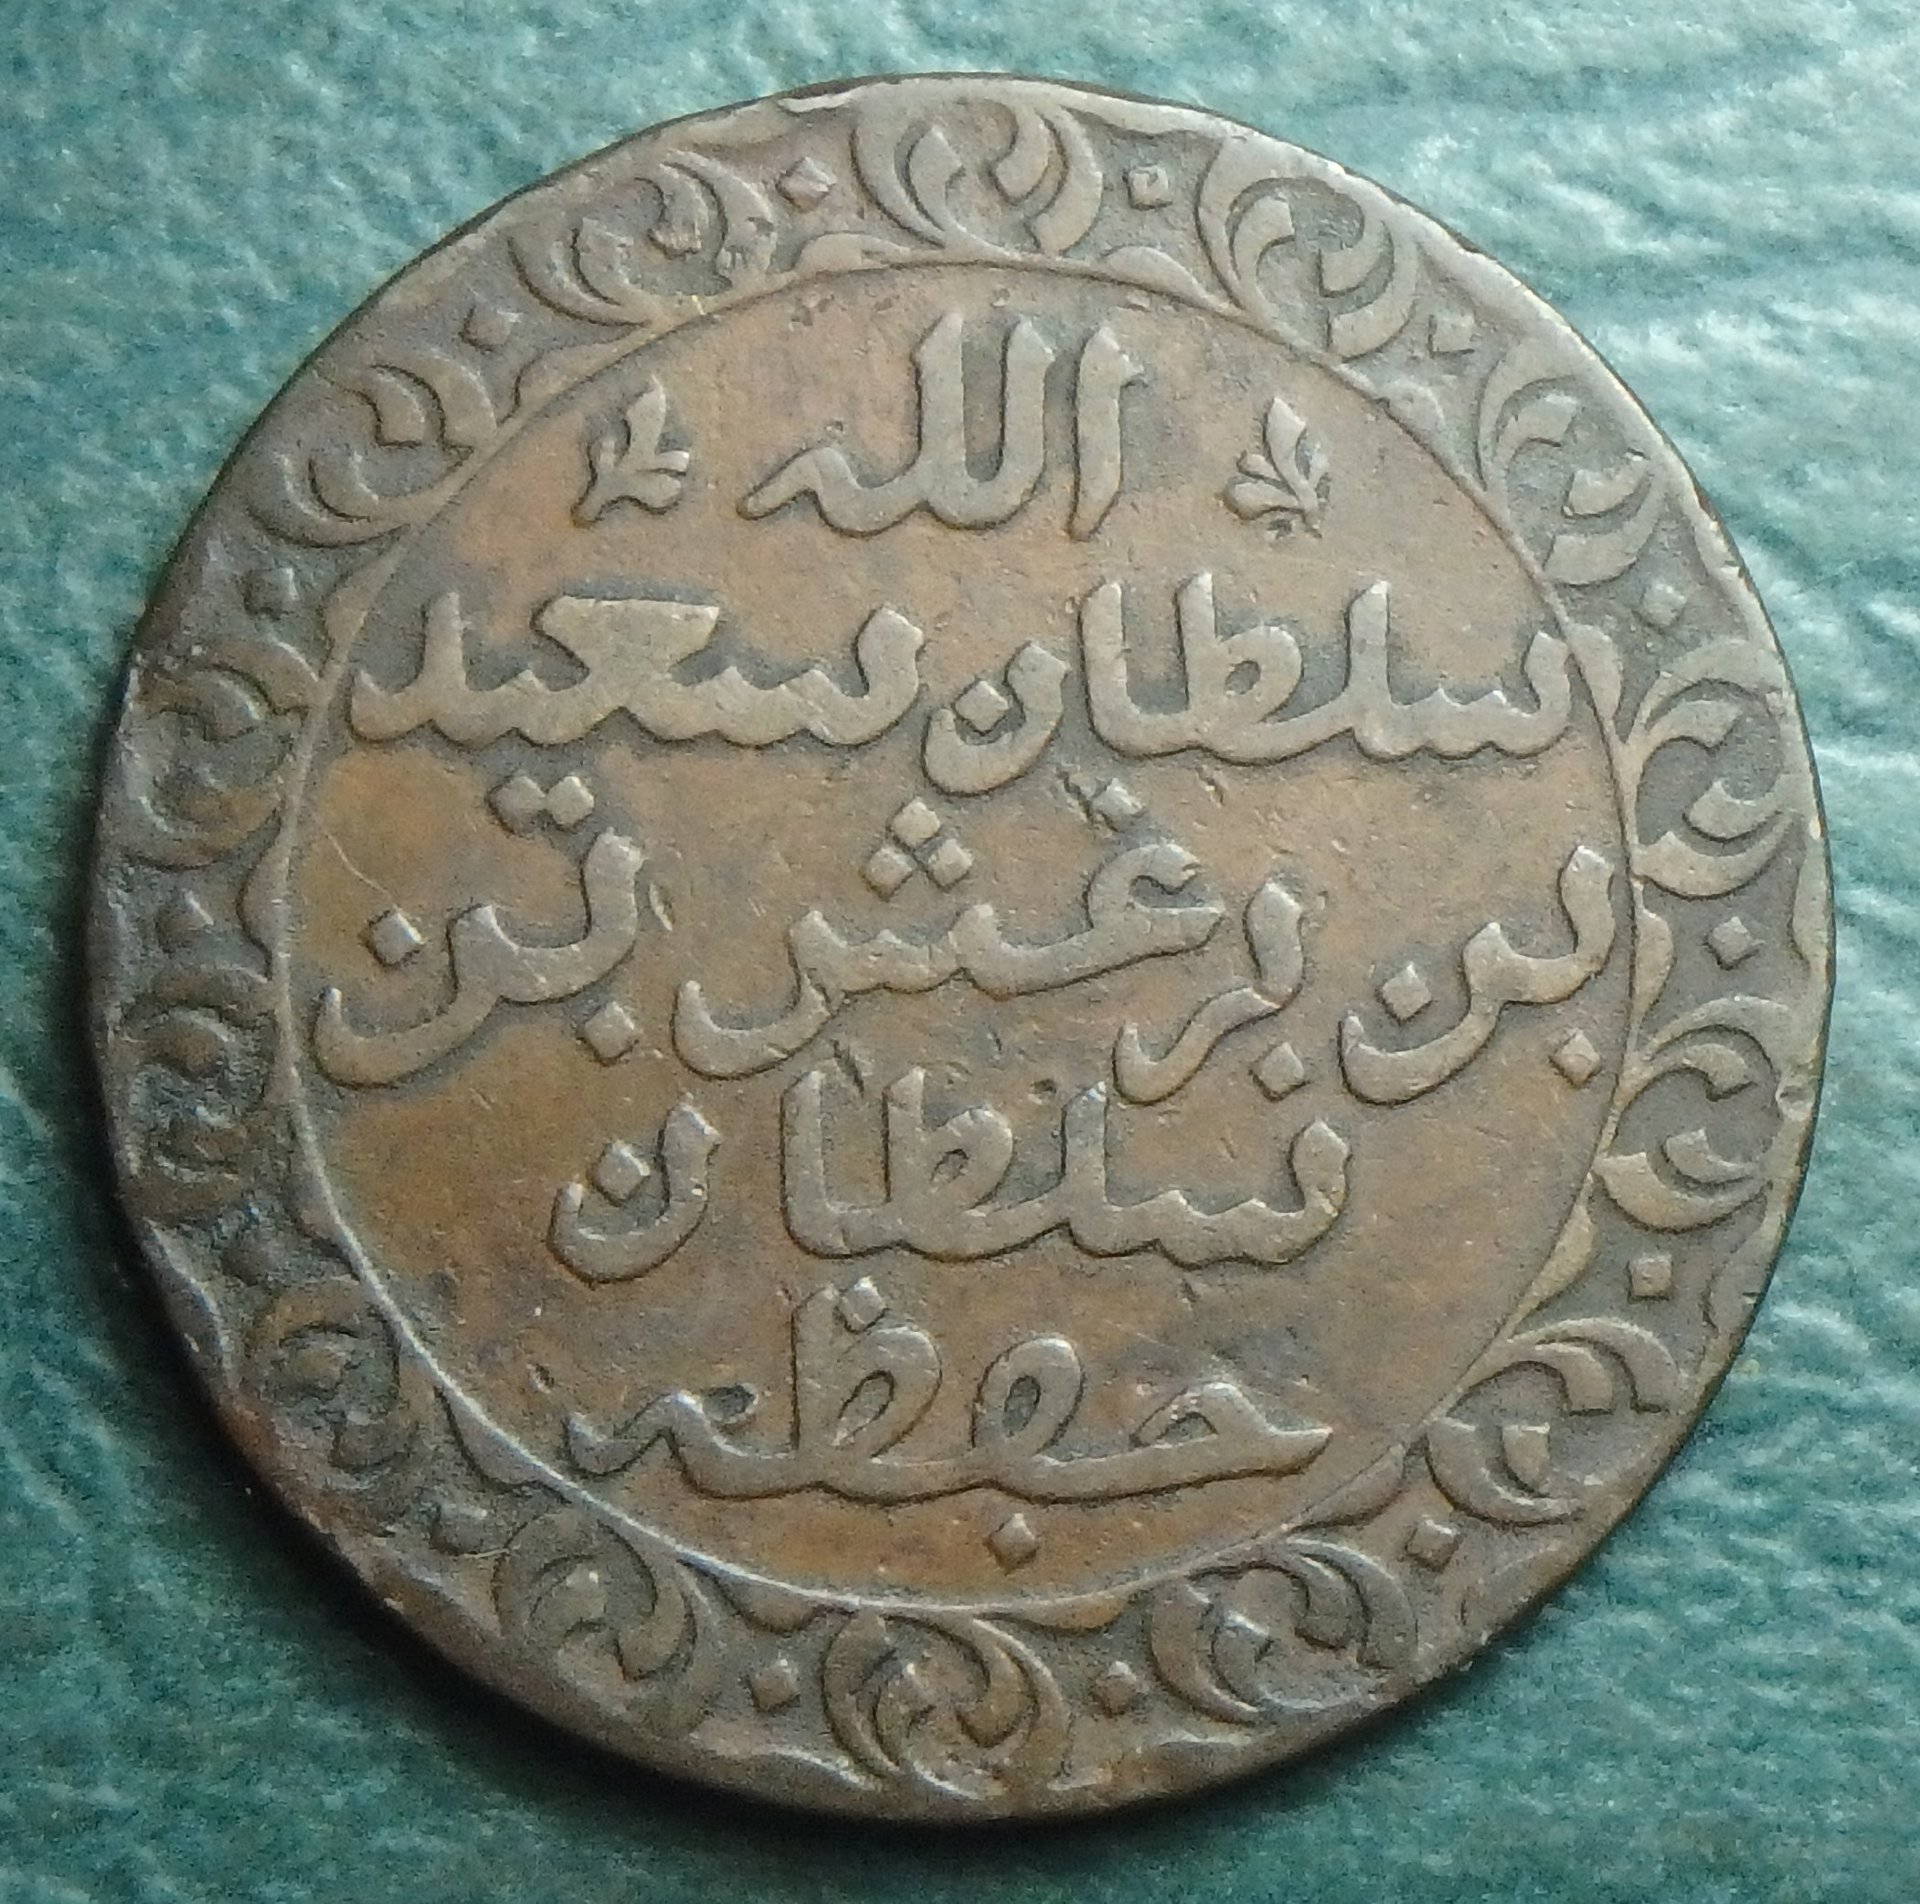 1882 Zanzibar 1 p obv (1).JPG